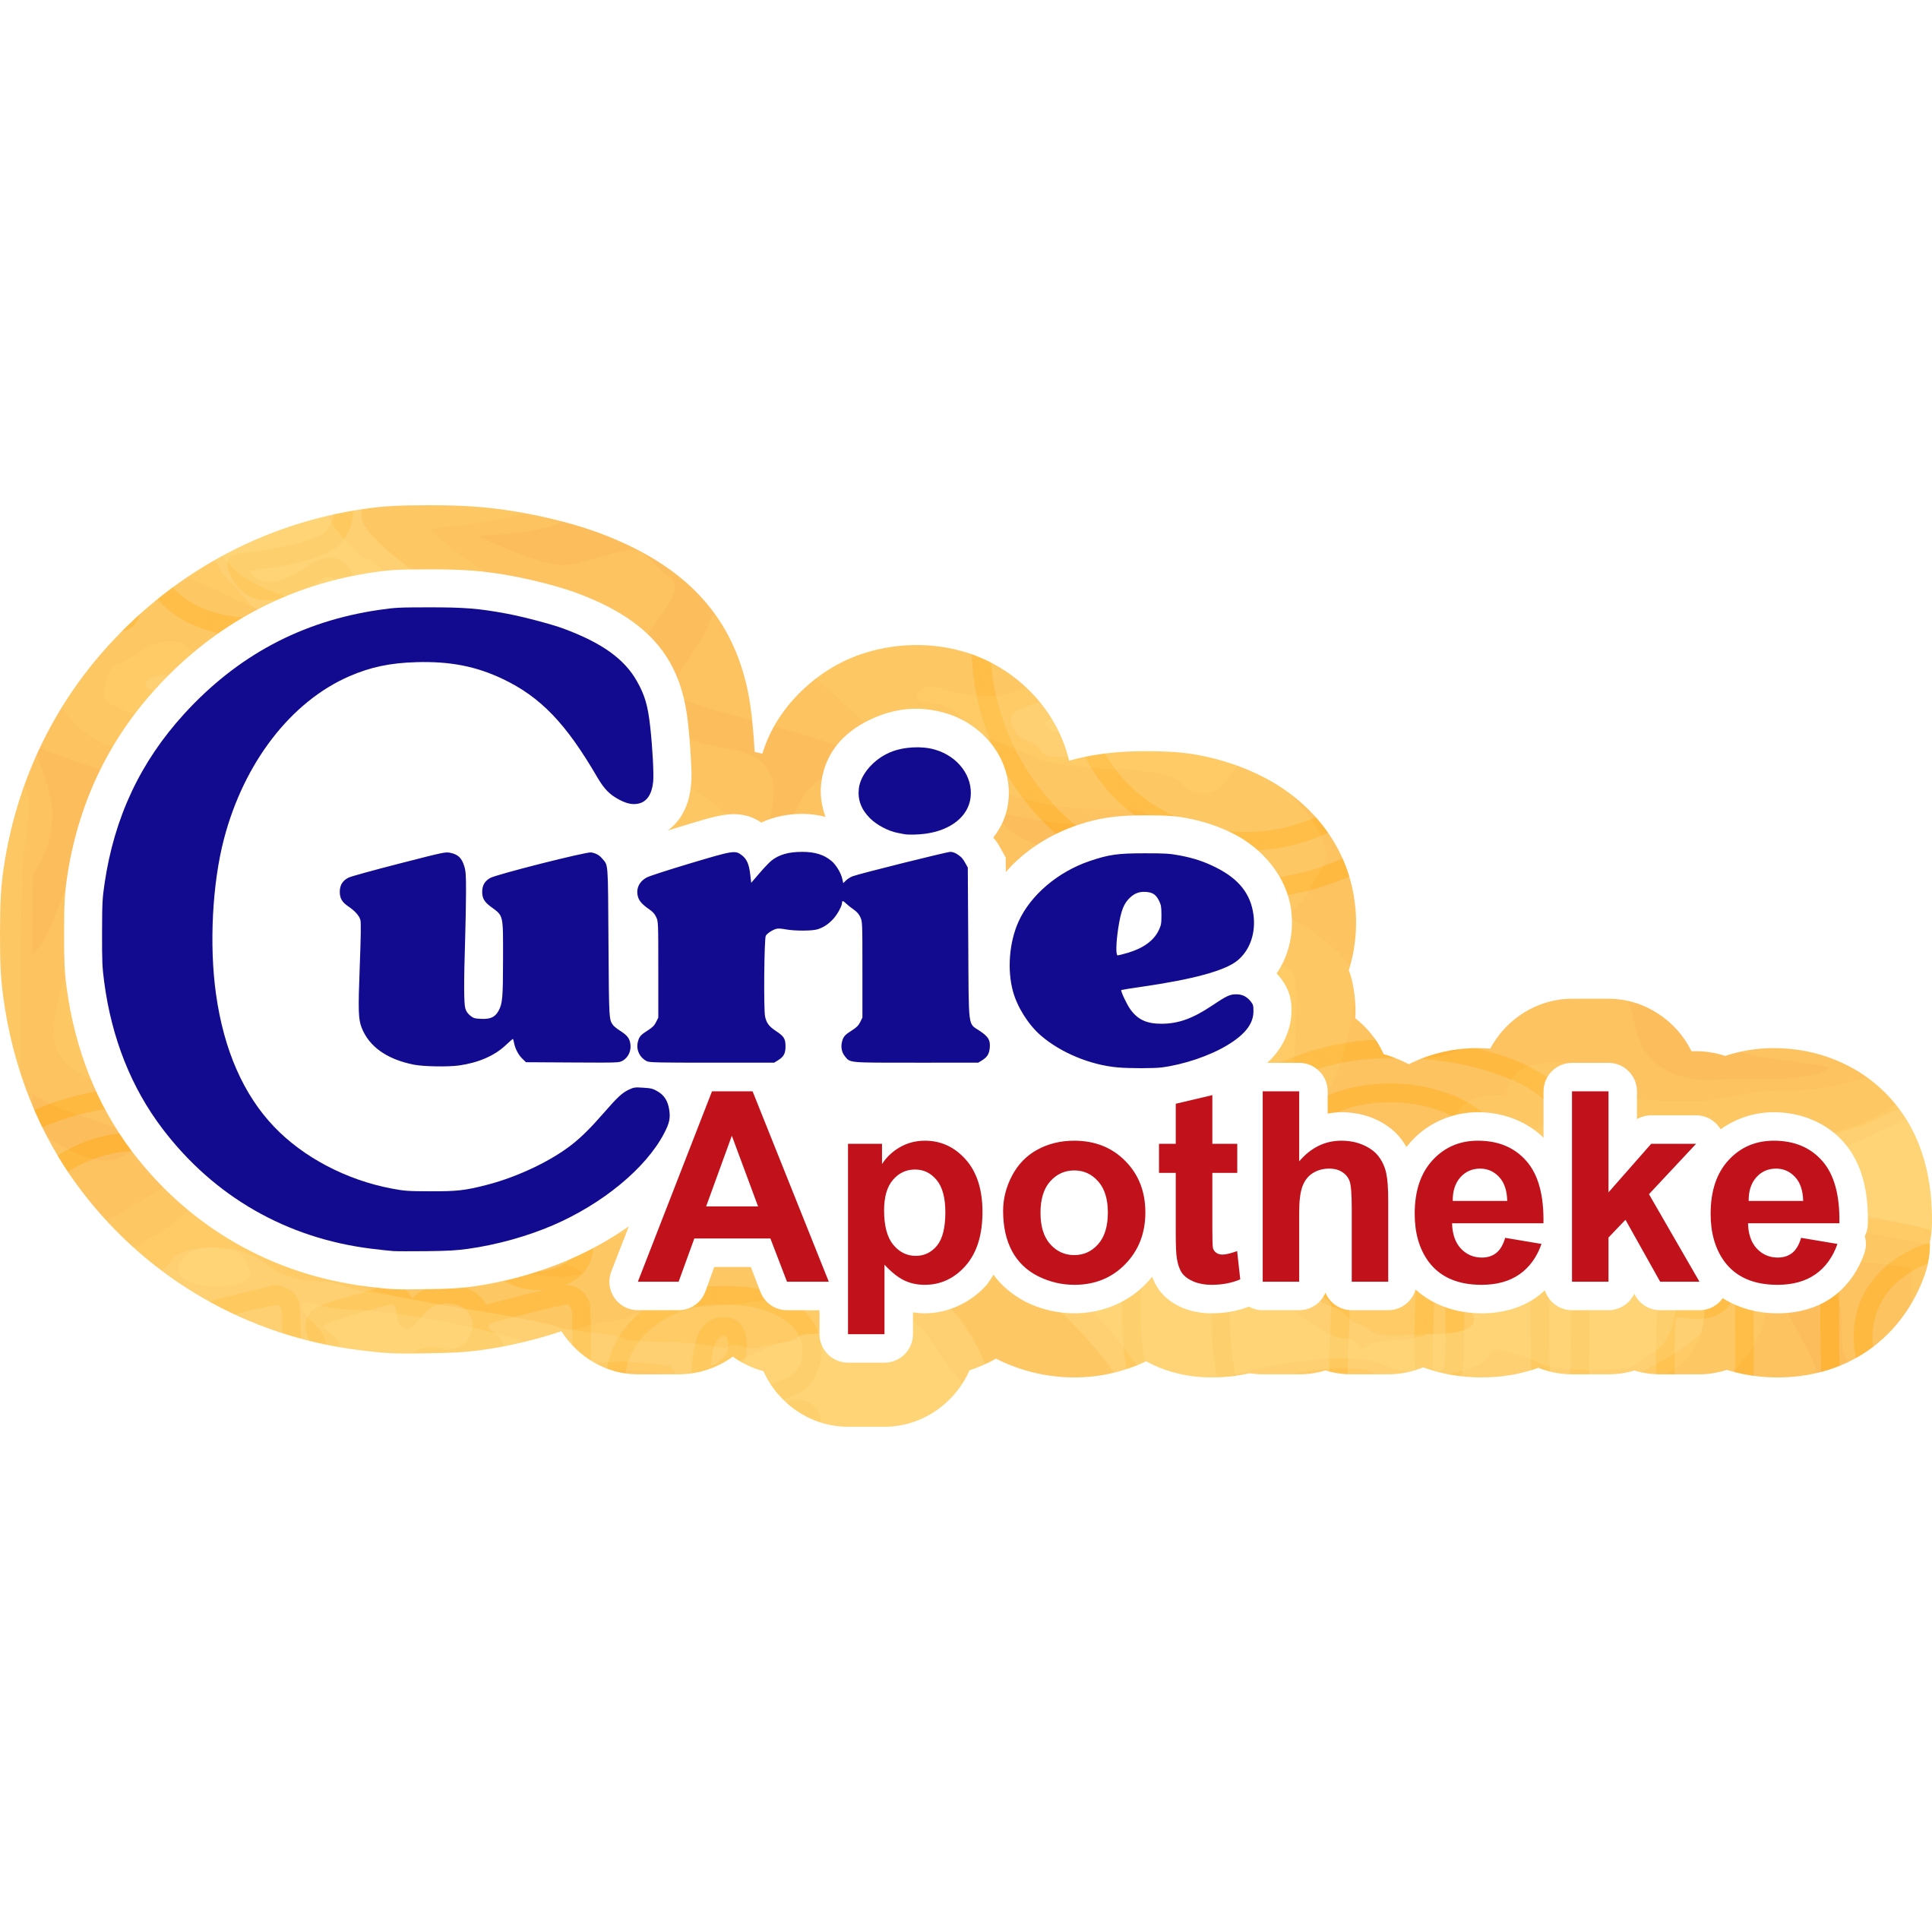 Curie-Apotheke Leopoldshafen Logo